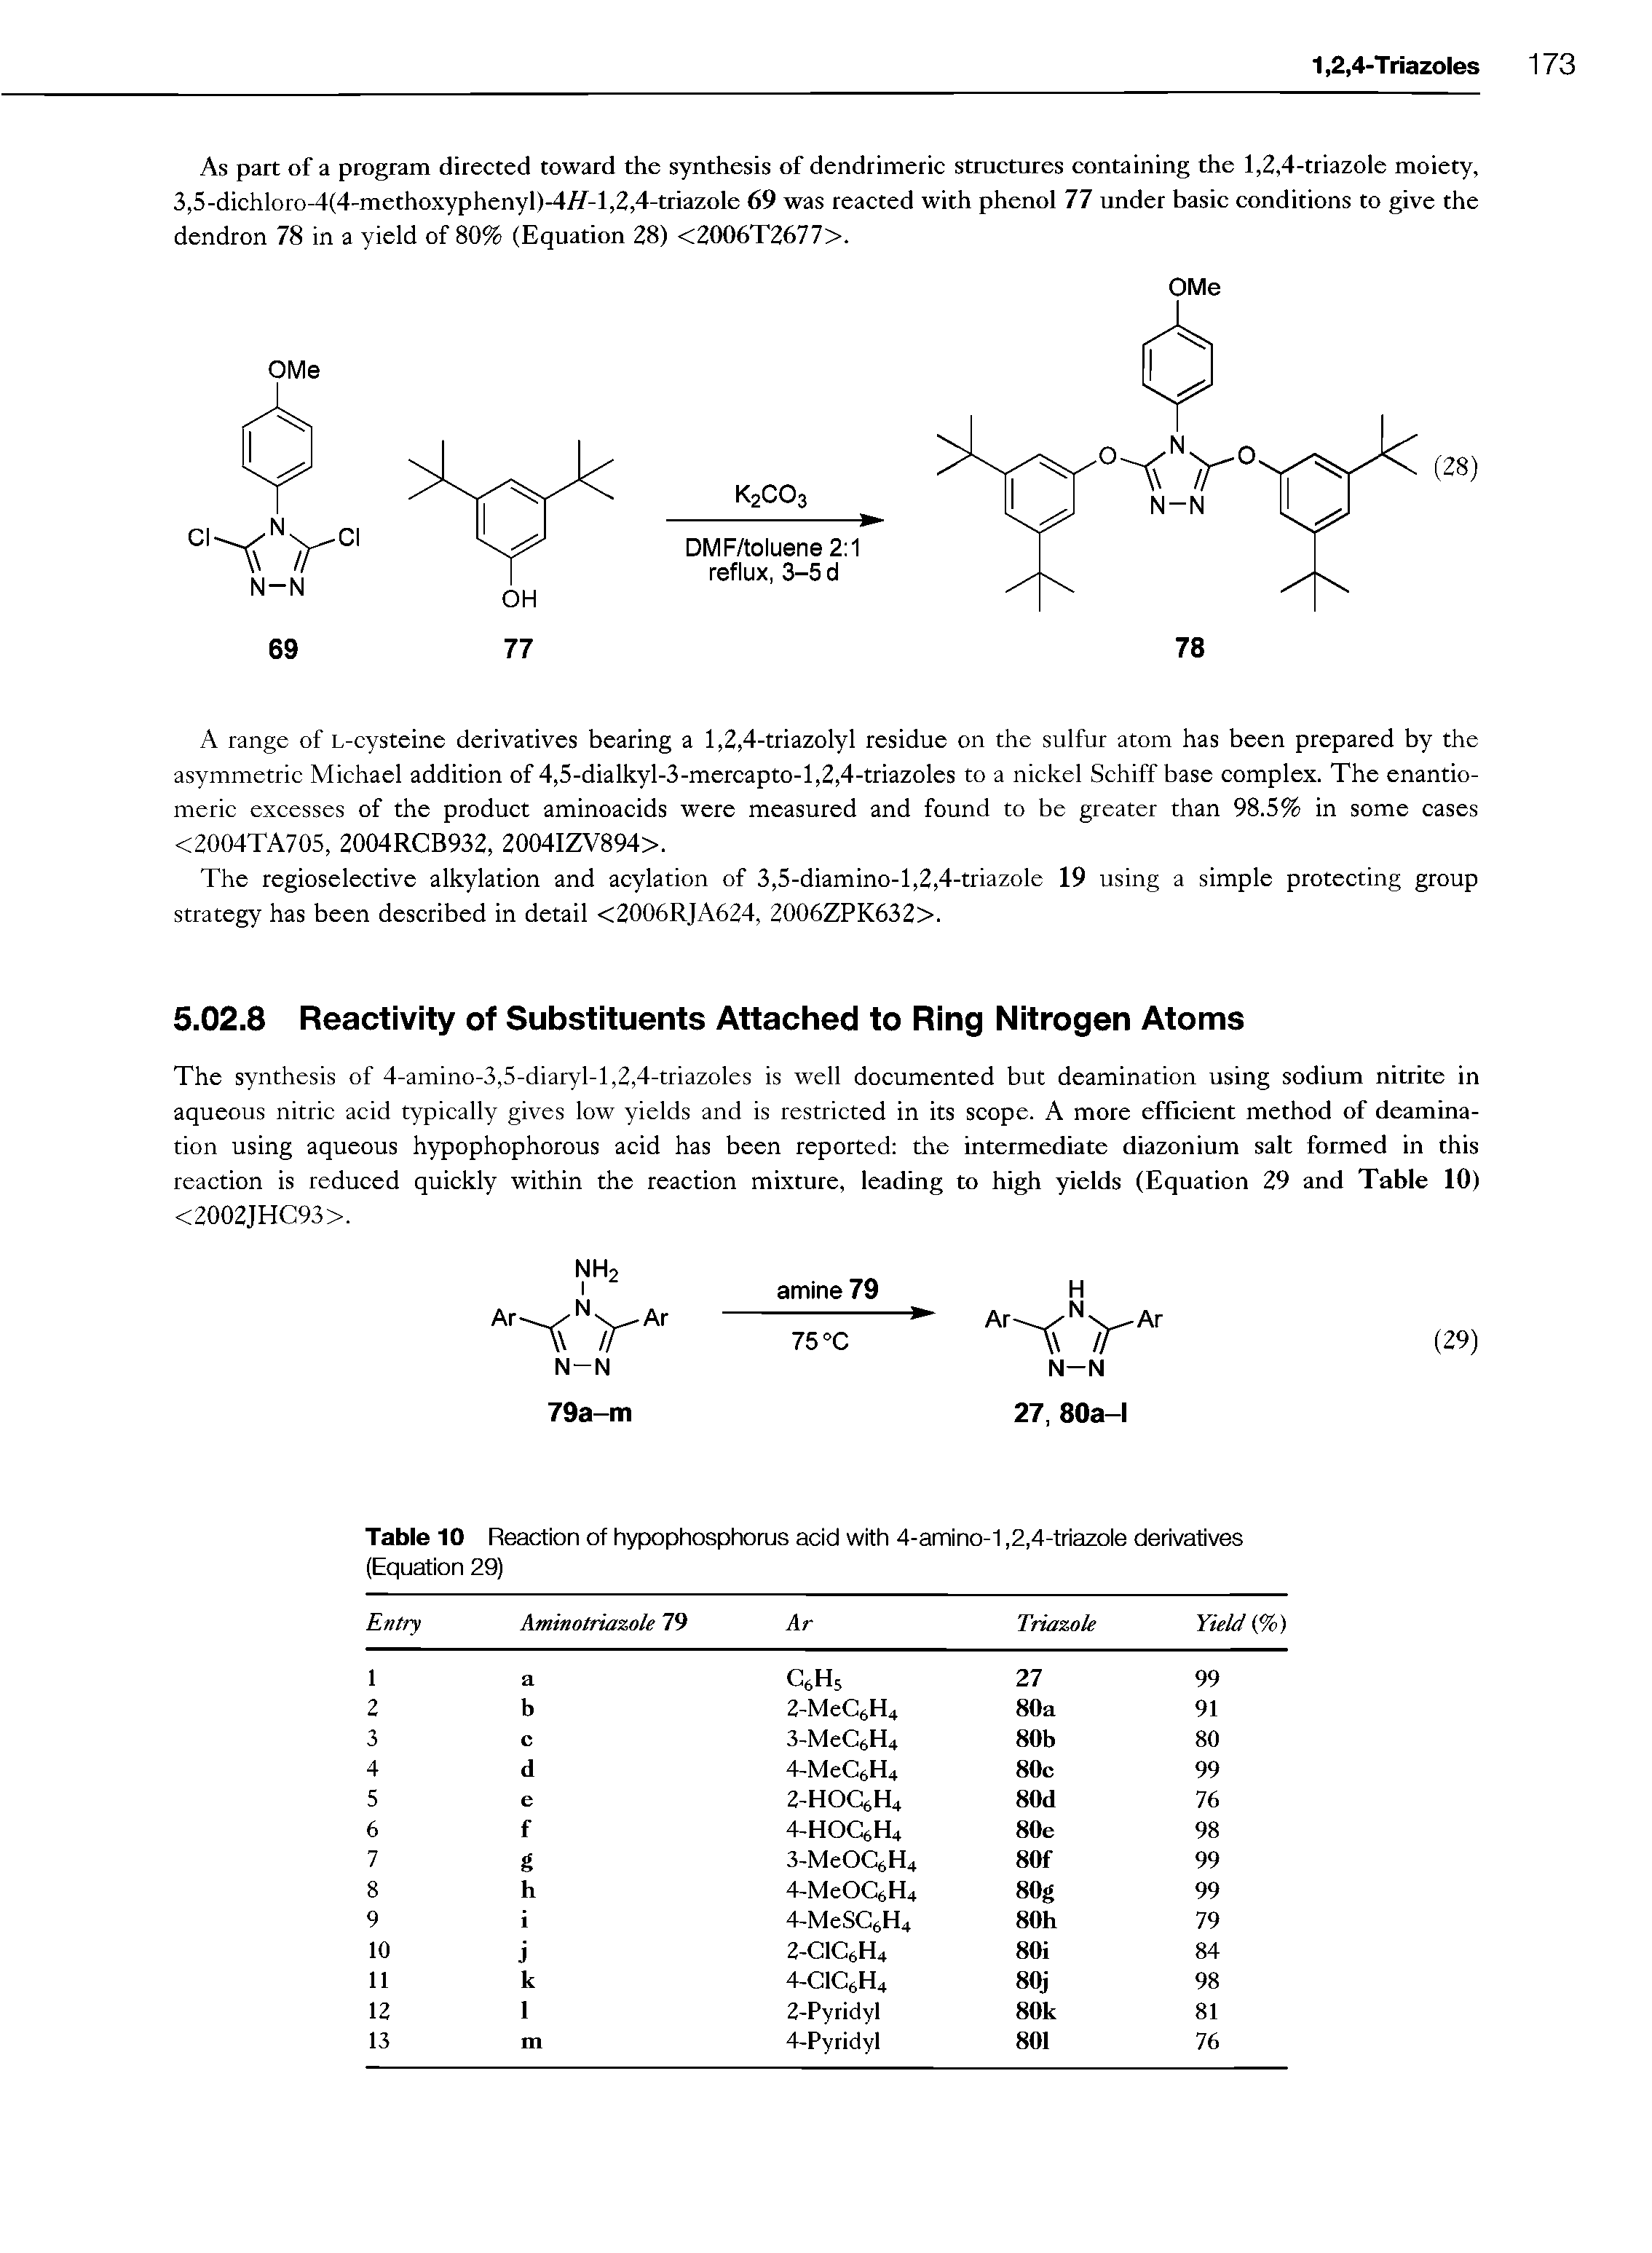 Table 10 Reaction of hypophosphorus acid with 4-amino-1,2,4-triazole derivatives (Equation 29)...